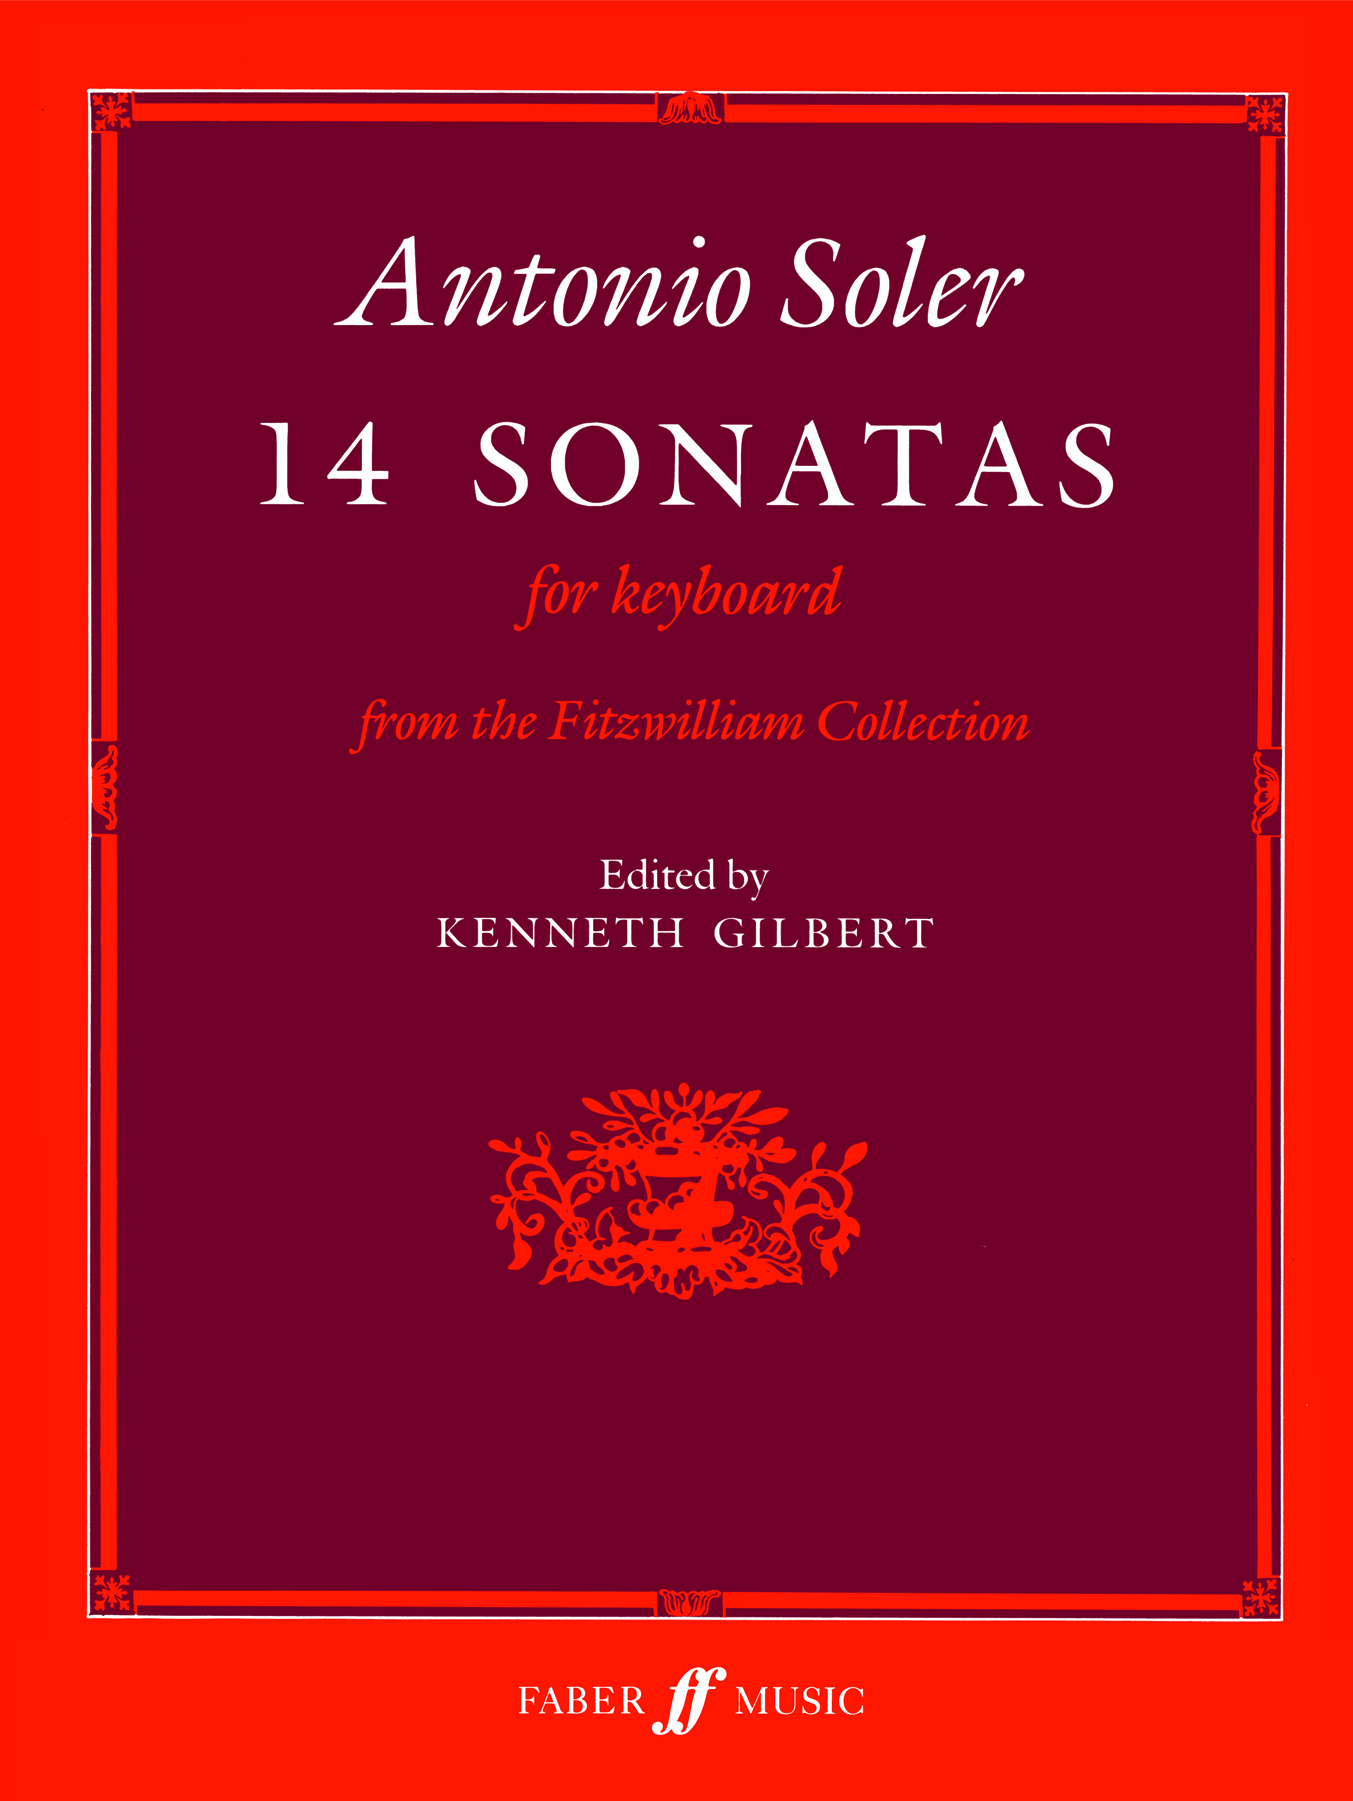 Fourteen Sonatas